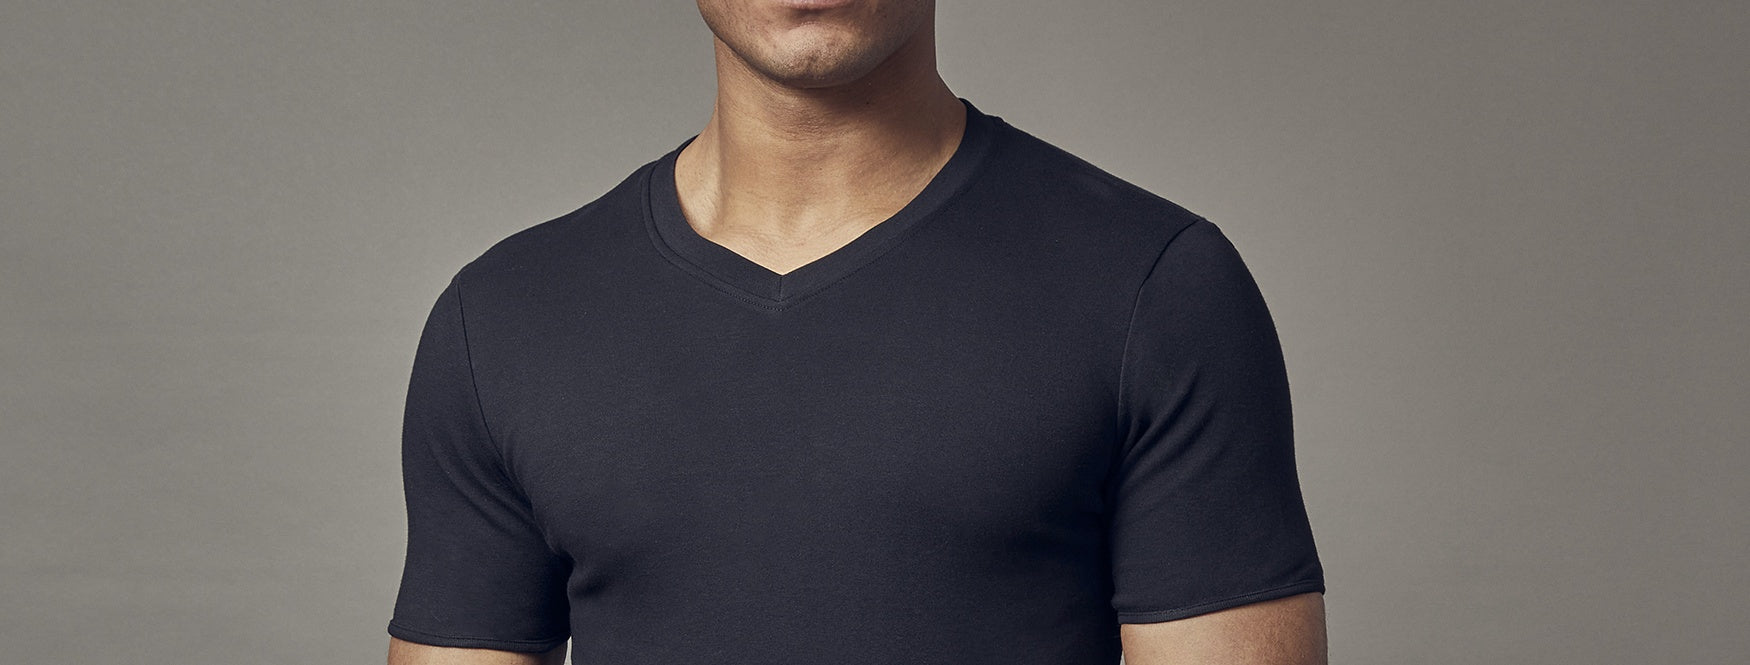 Best Fitting V-Neck T-Shirts for Men